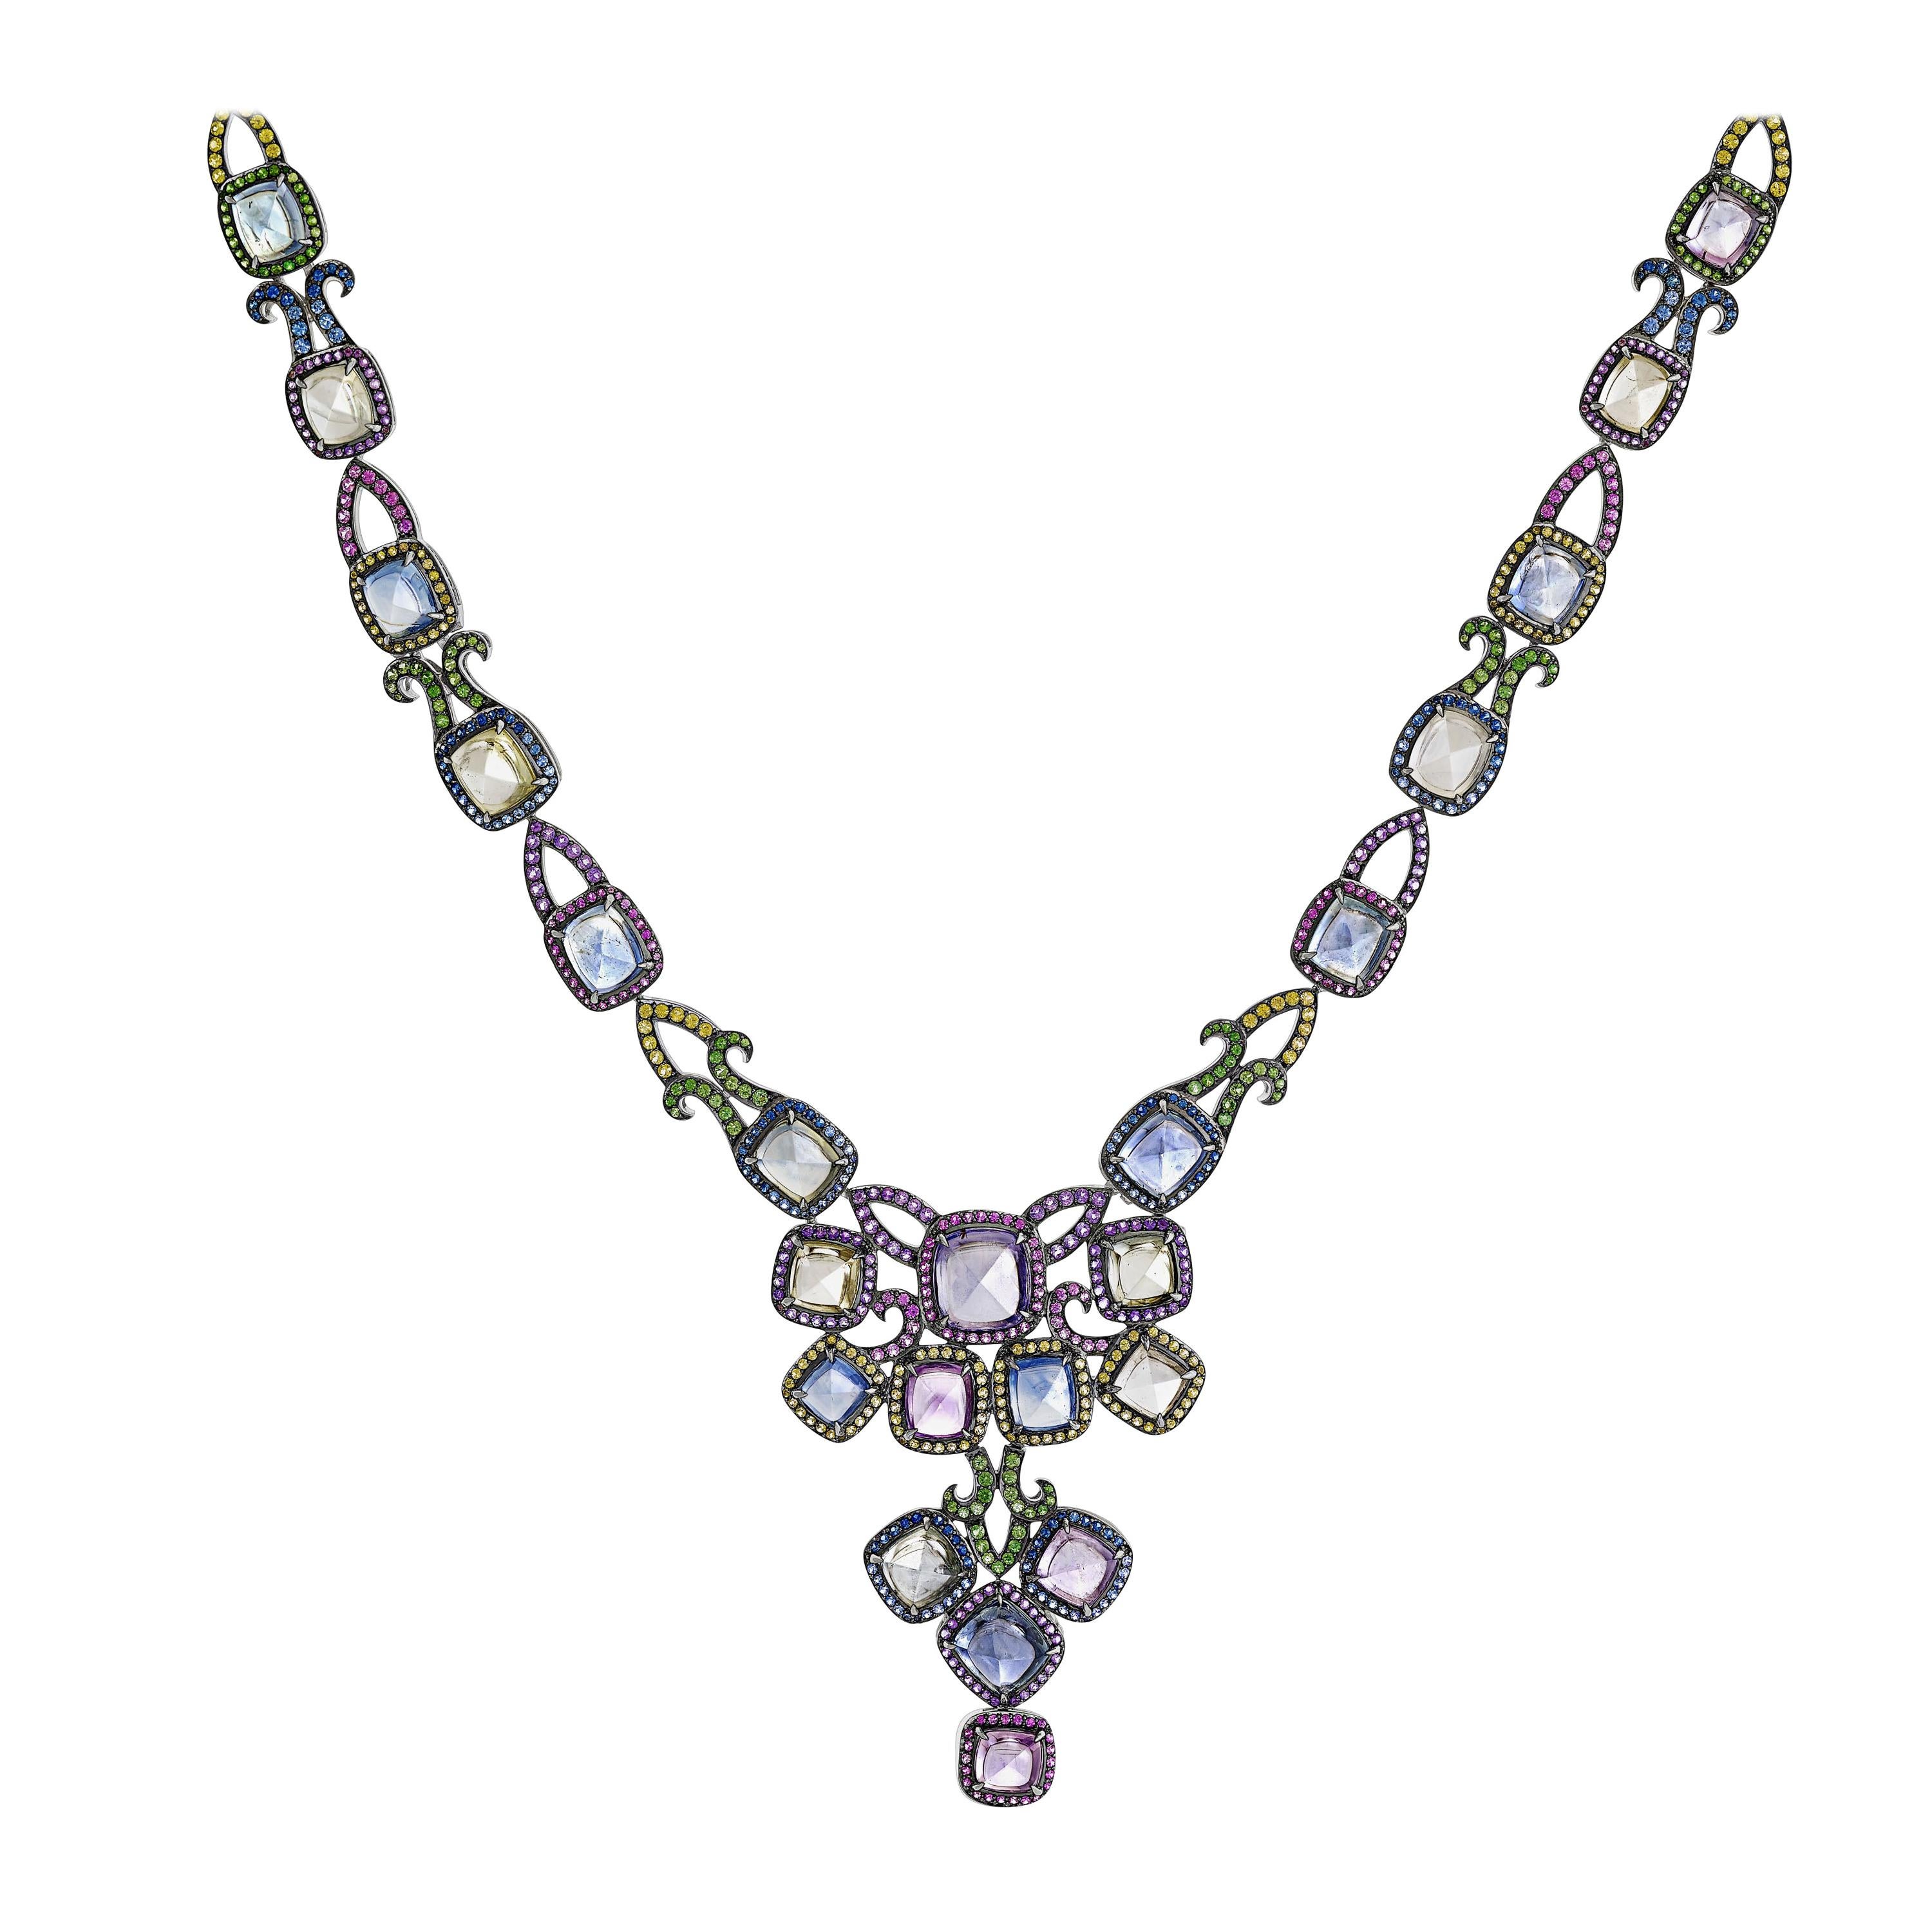 69.69 Carat Burmese Sugarloaf Sapphire Necklace Set in 18 Karat White Gold